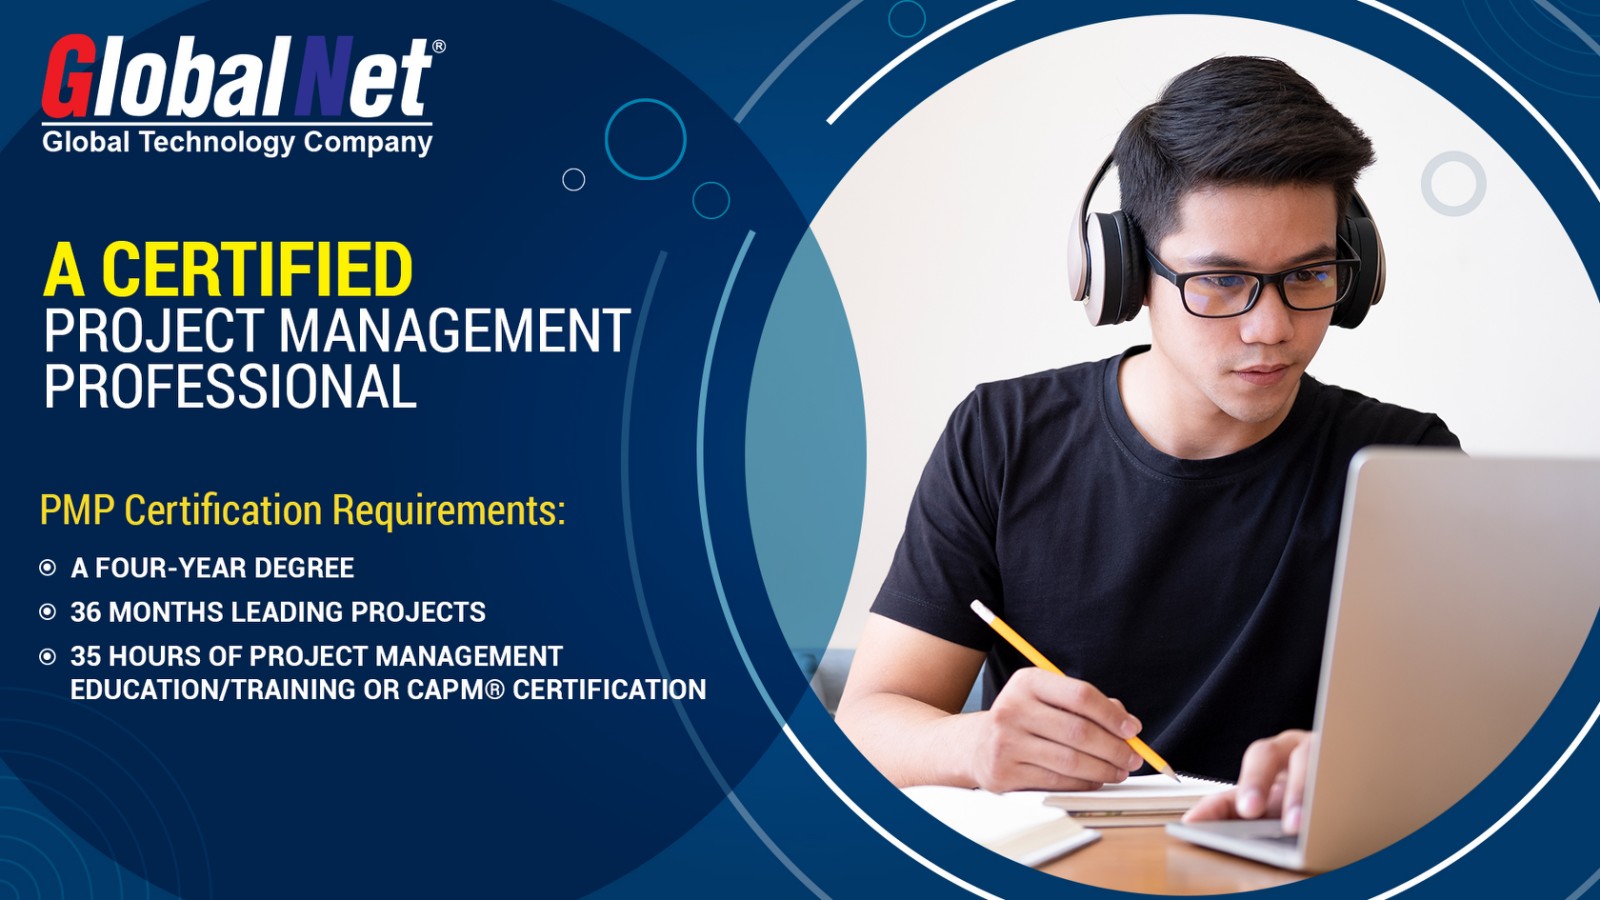 “Certified Project Management Professional” တစ်ယောက်ဖြစ်ချင်ပါသလား